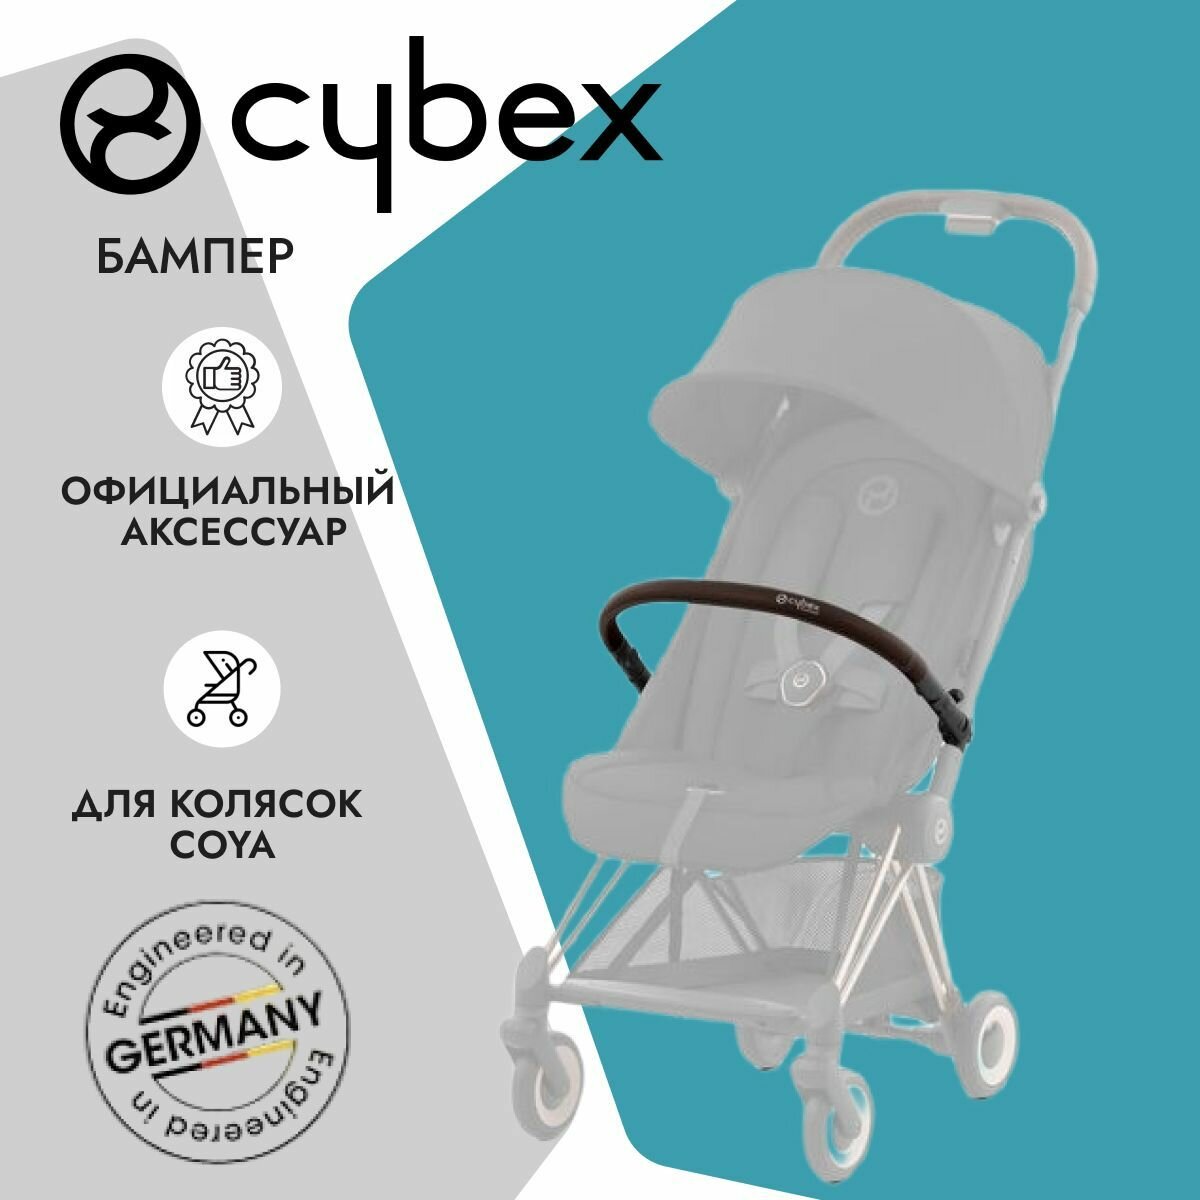 Cybex Бампер для коляски CYBEX Coya Dark Brown